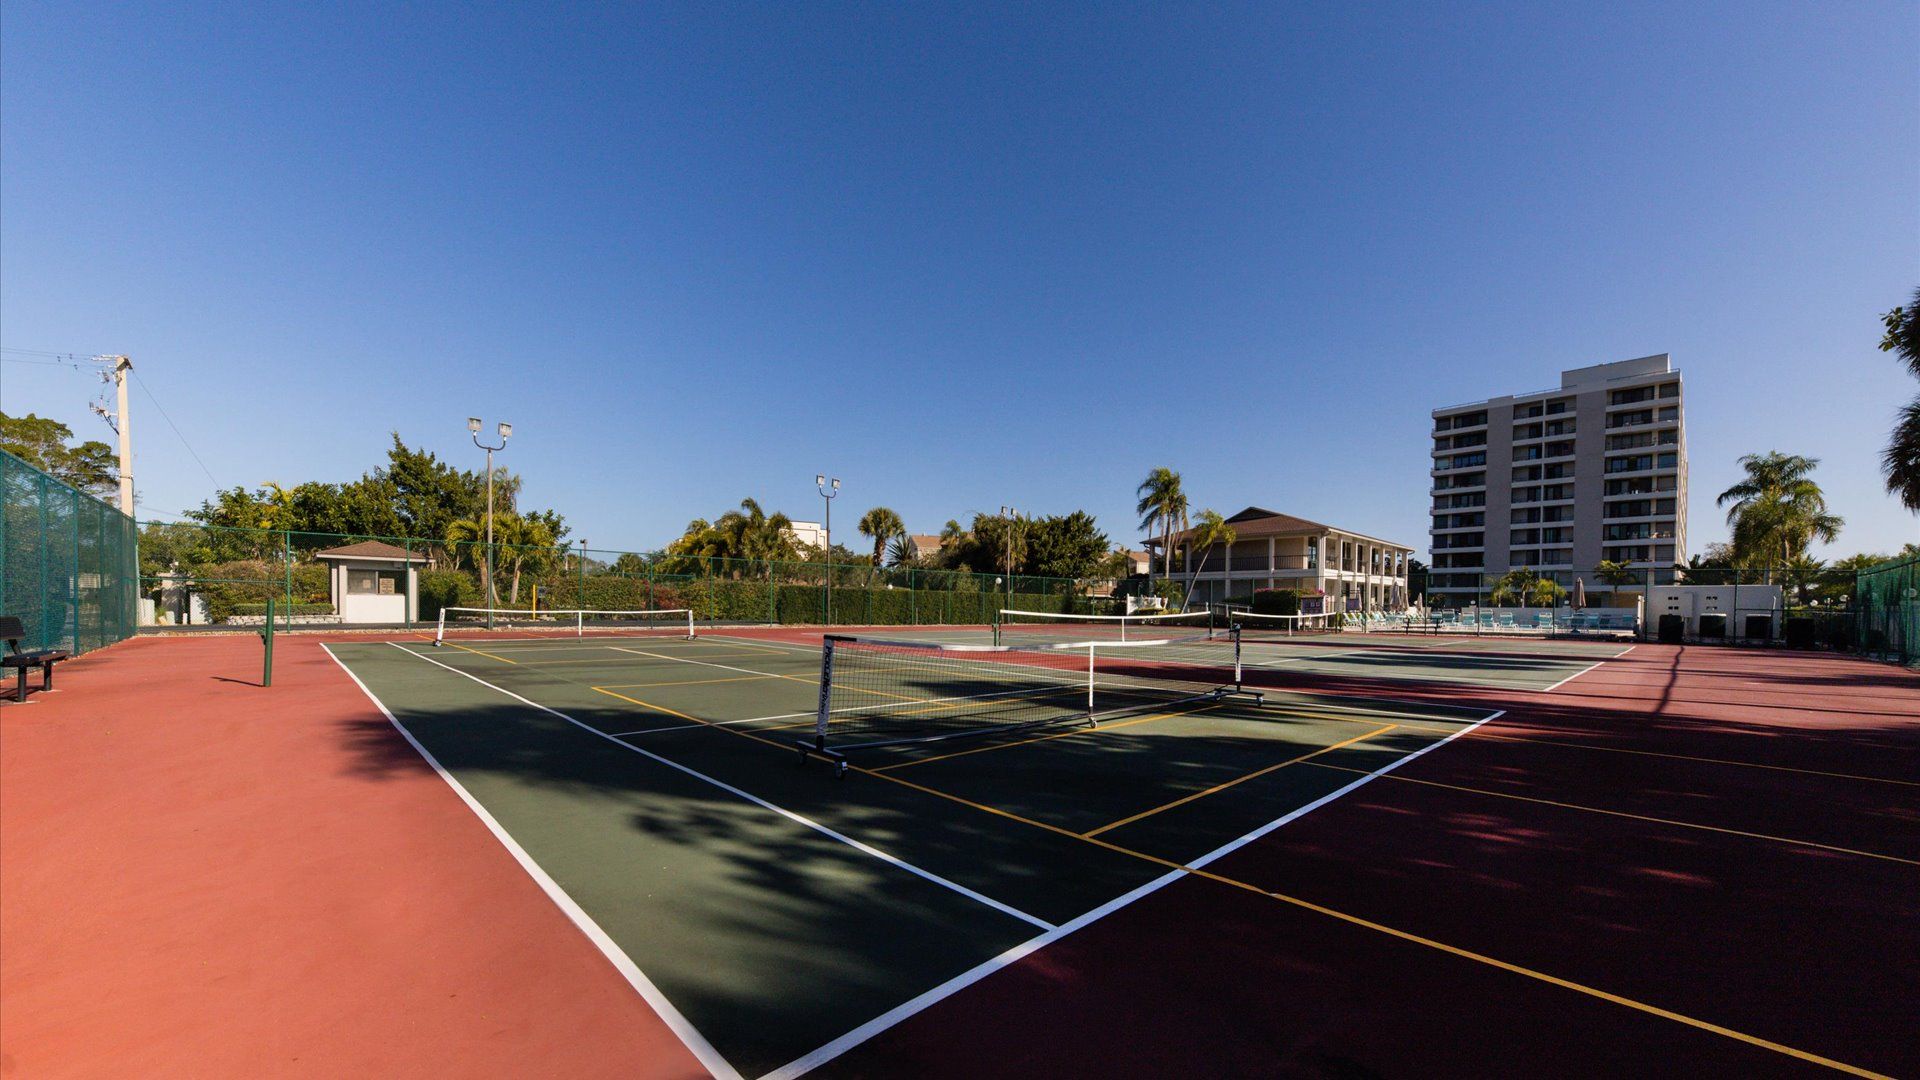 Tennis & Pickleball Courts